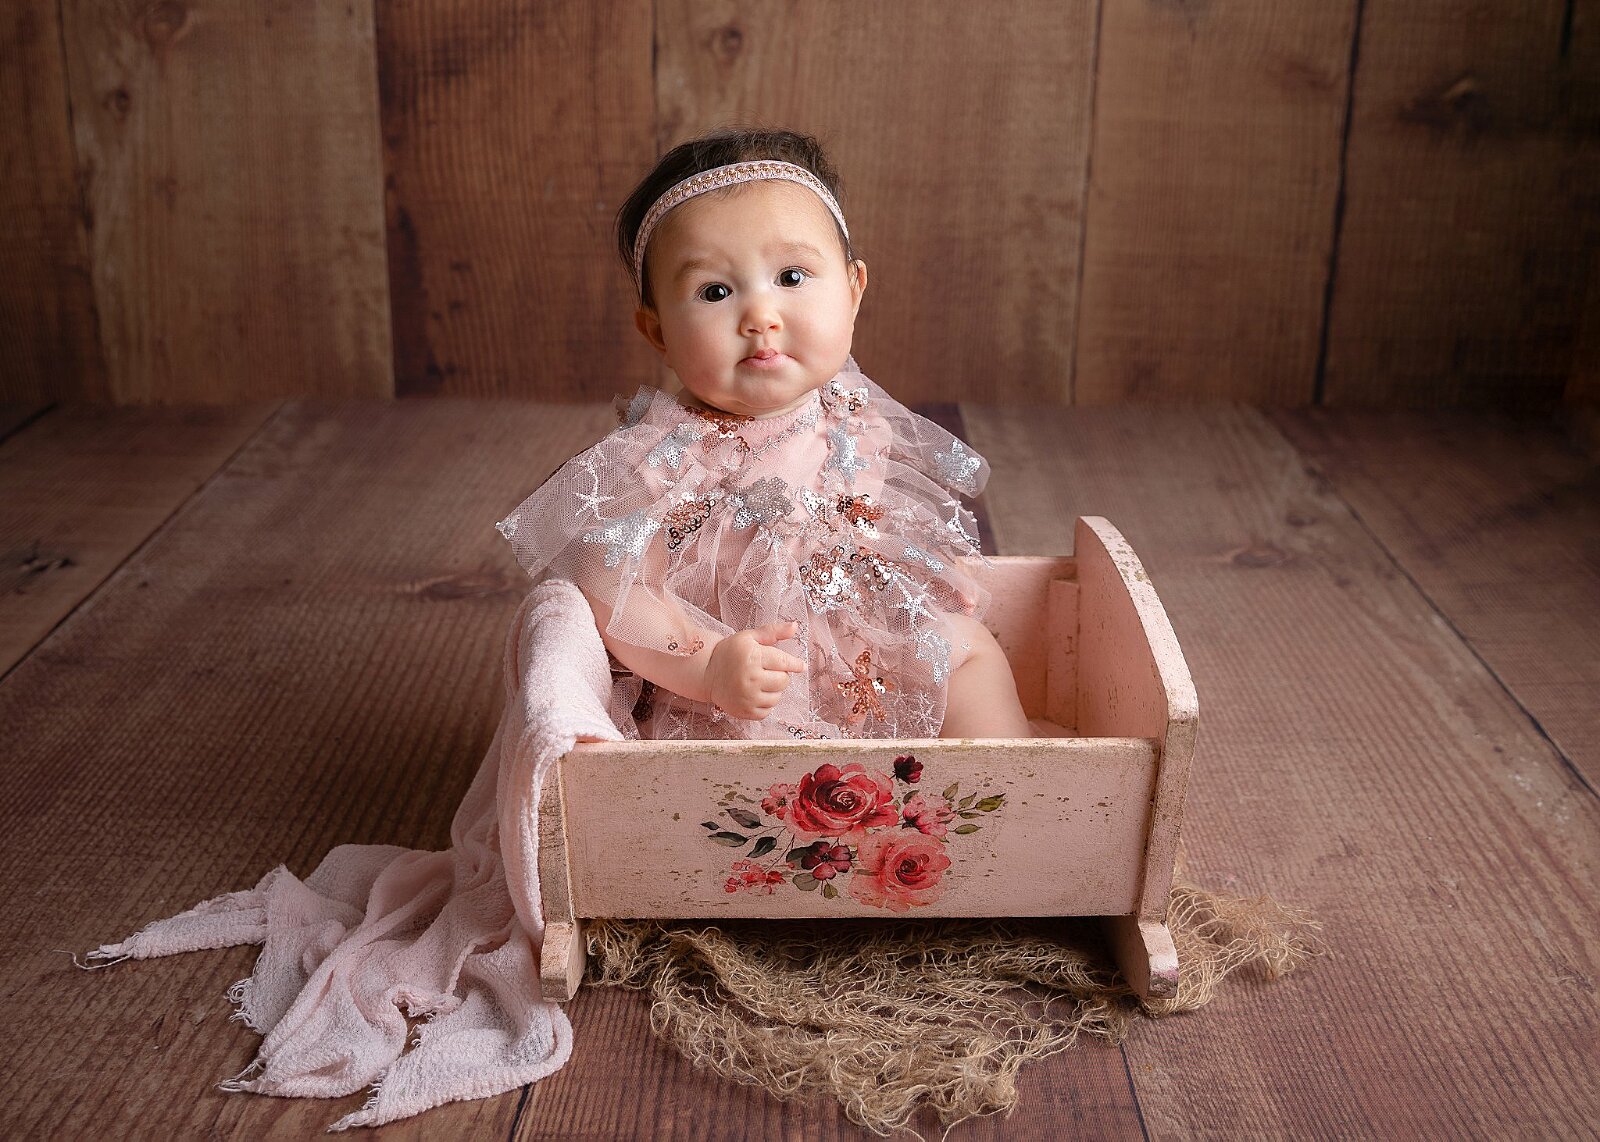 Baby girl sitter/milestone photo shoot in studio Hereford, Herefordshire